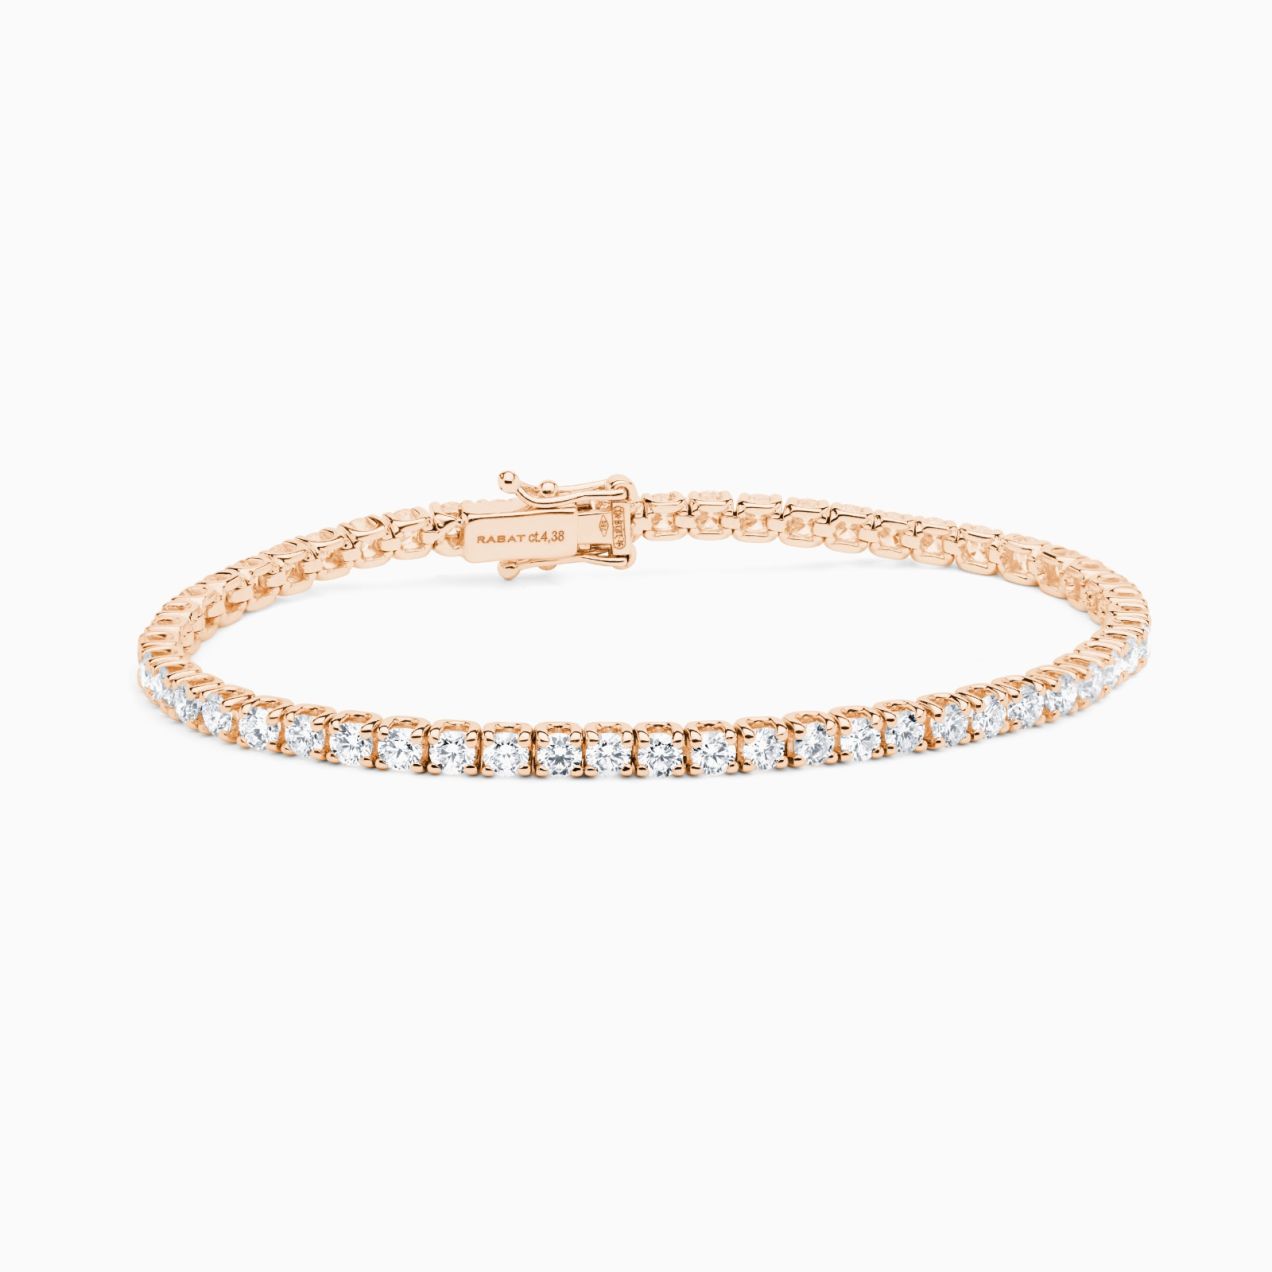 Rose gold riviere bracelet with diamonds